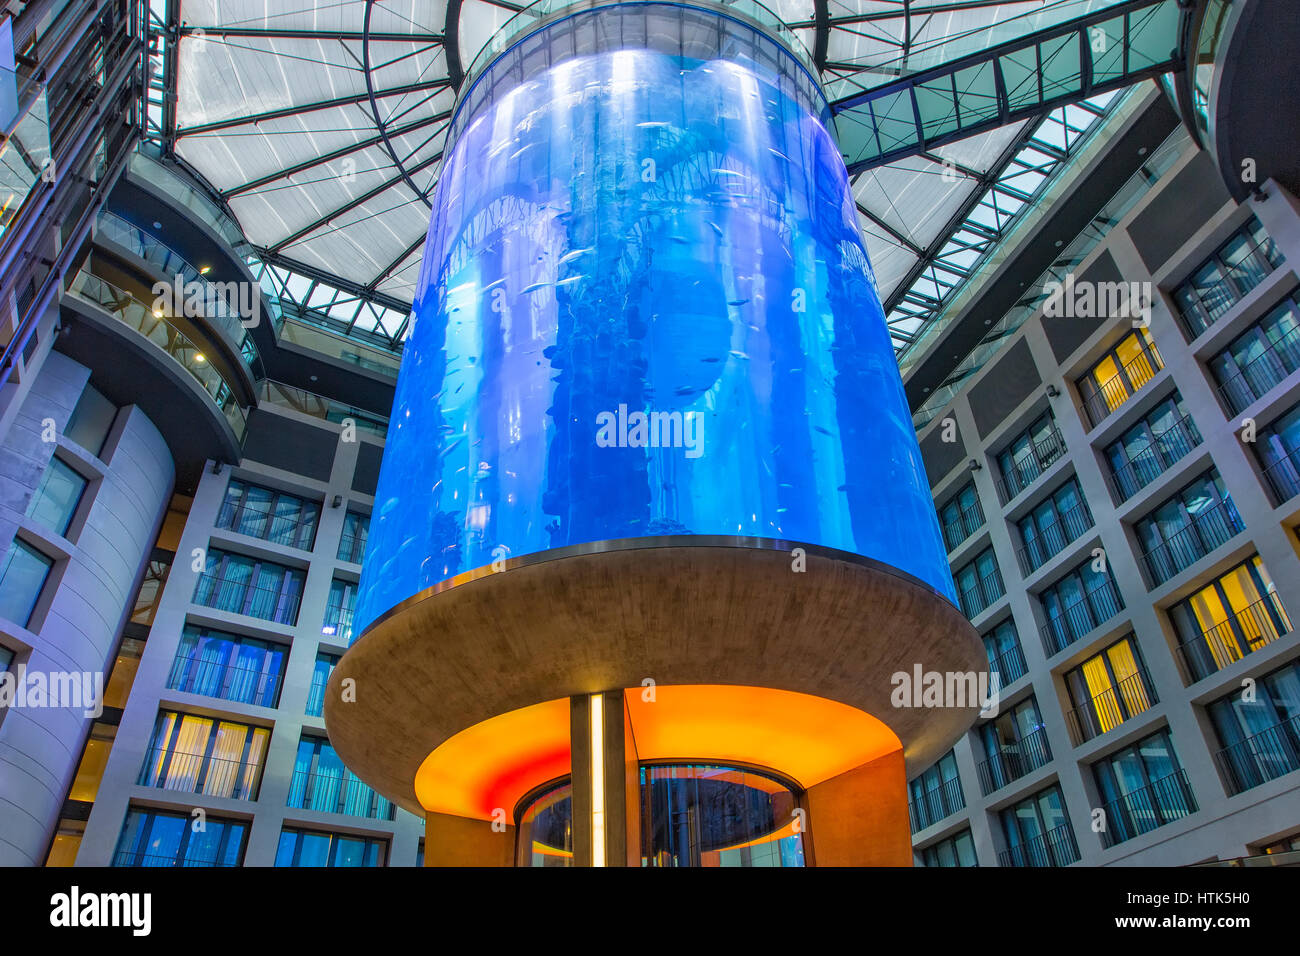 The Aquadom at Radisson Blu Hotel, Berlin, Germany Stock Photo